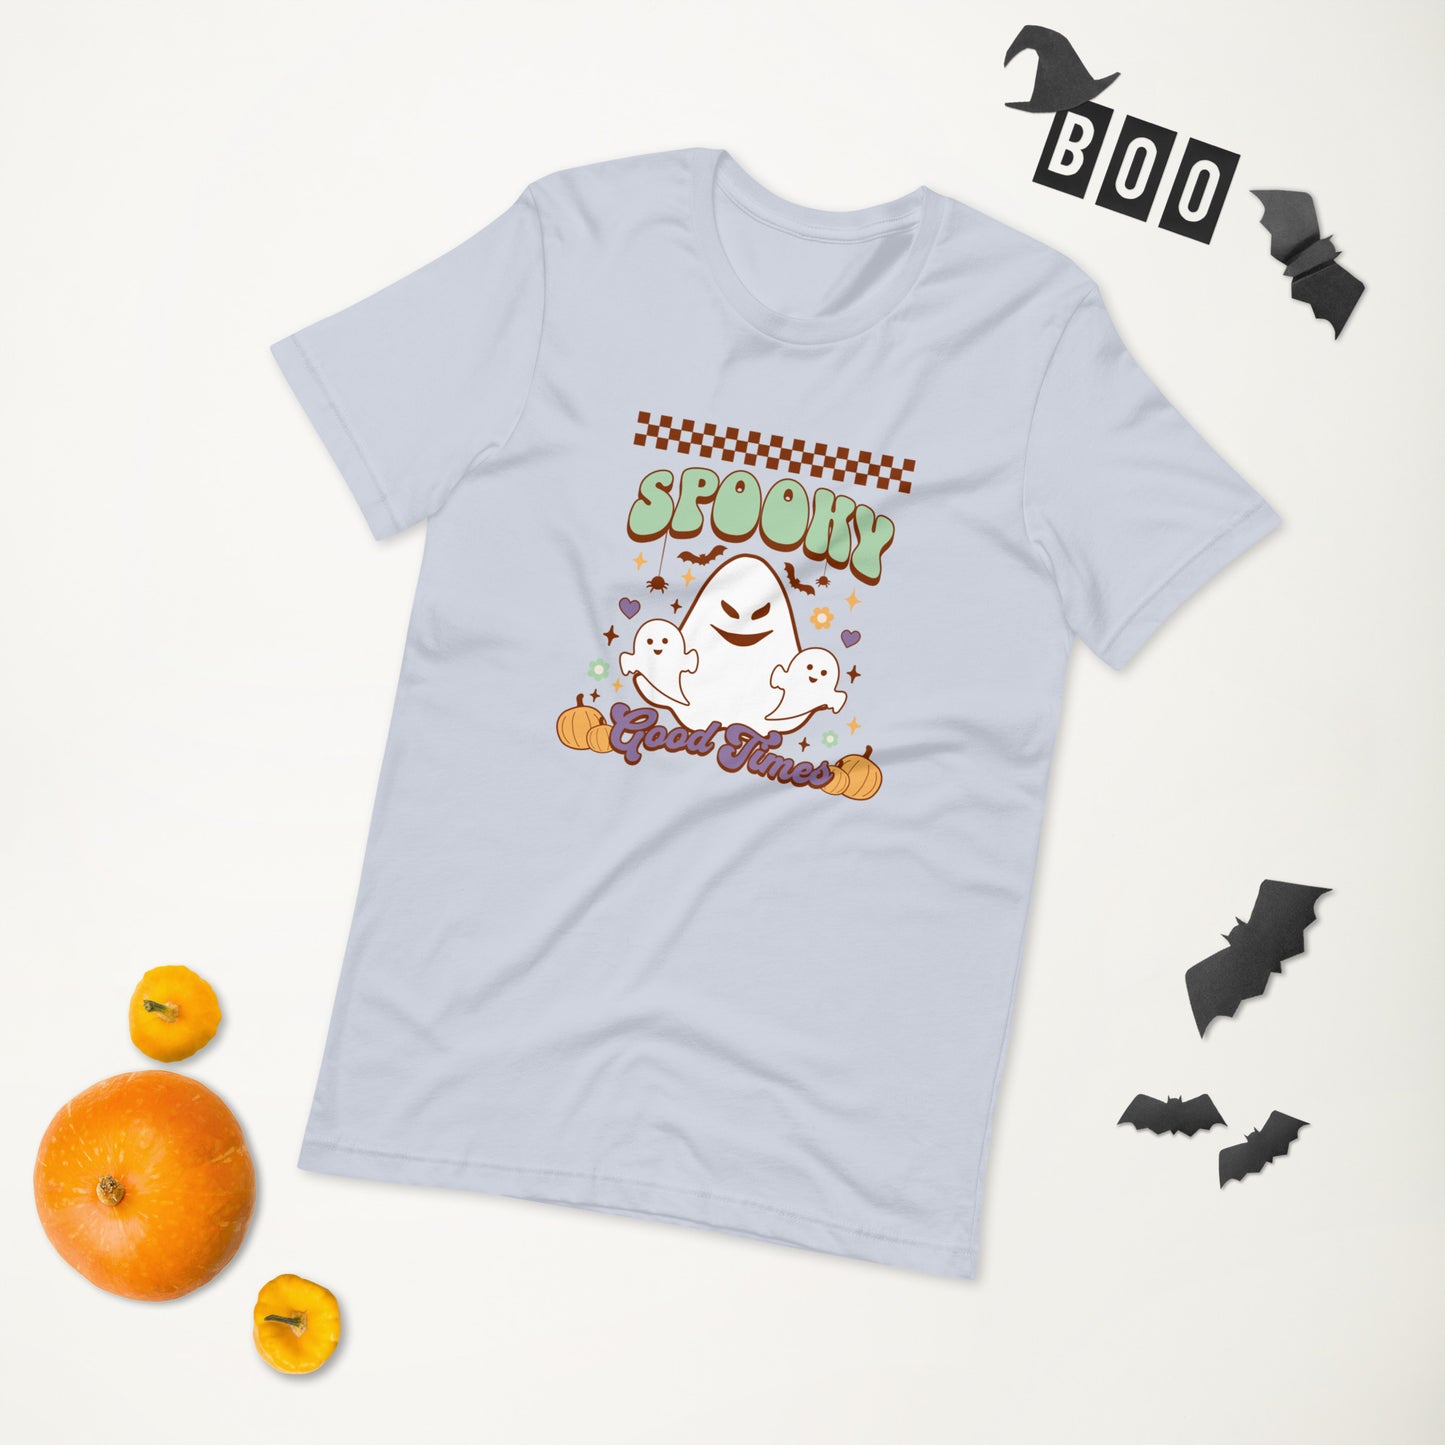 ADULT "Spooky Good Times" 3 Ghost Checkerboard Retro Cute Halloween Unisex t-shirt tshirt